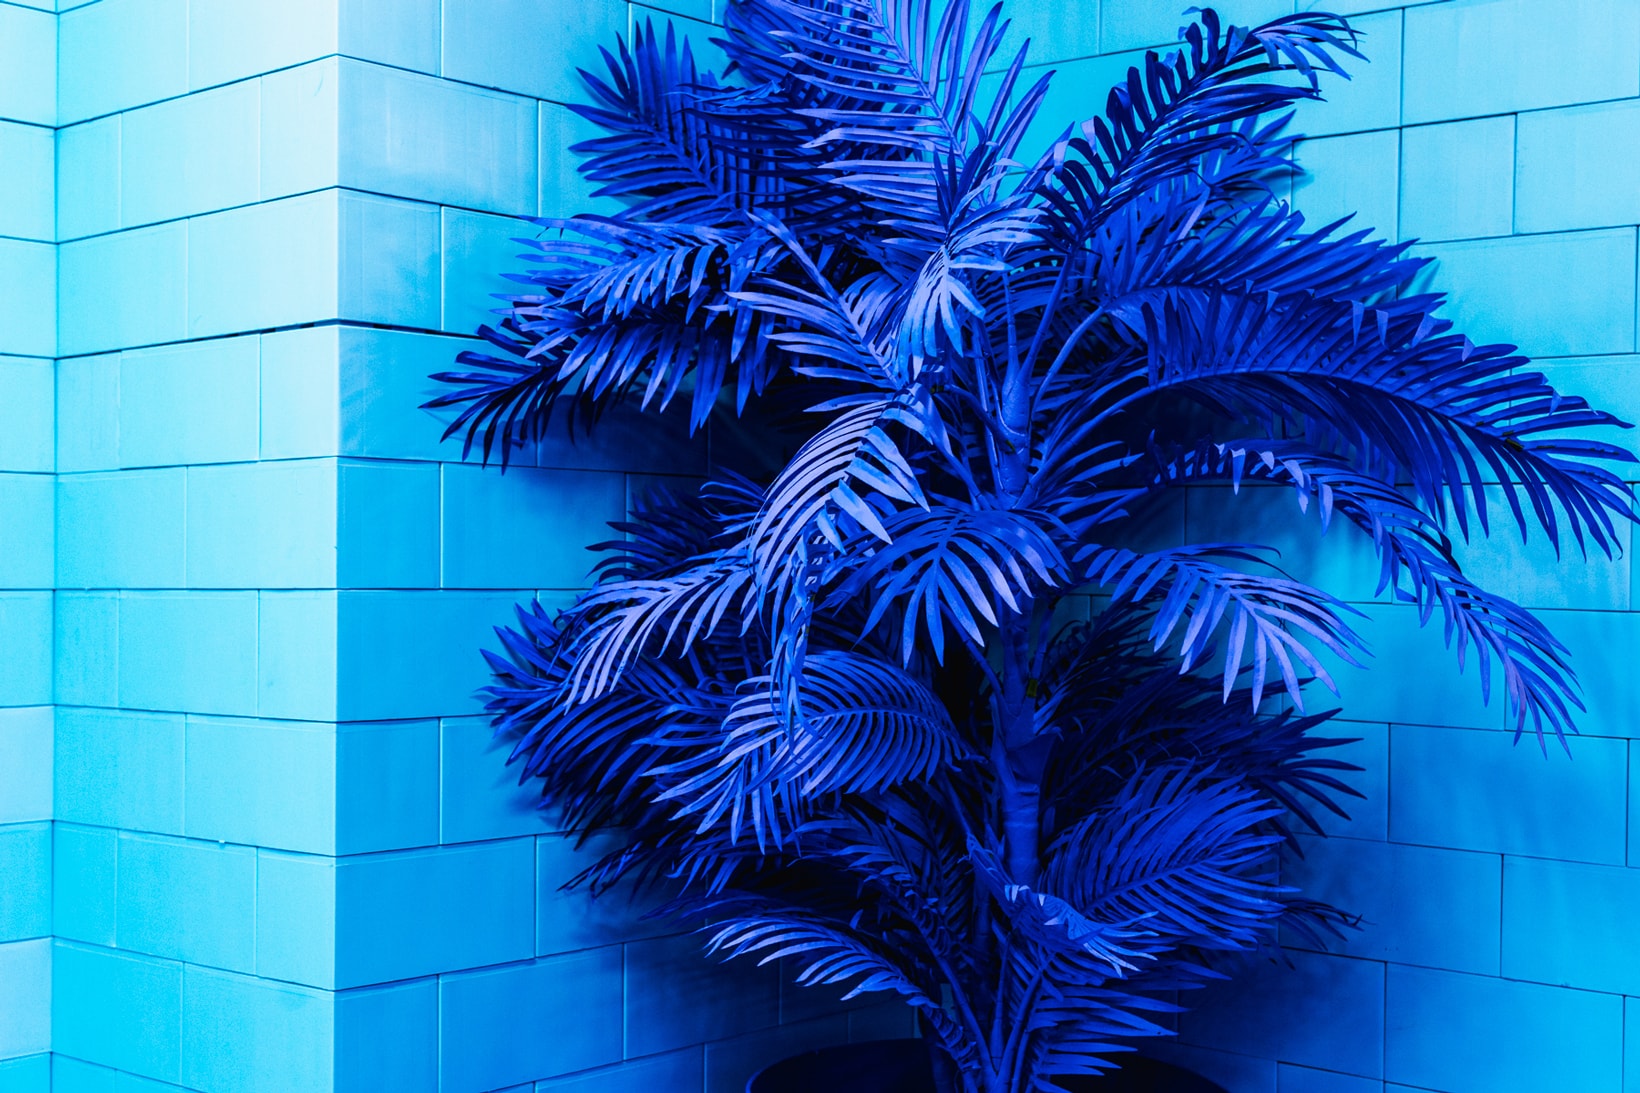 CJ Hendry Monochrome Greenpoint Brooklyn Exhibit Blue Living Room